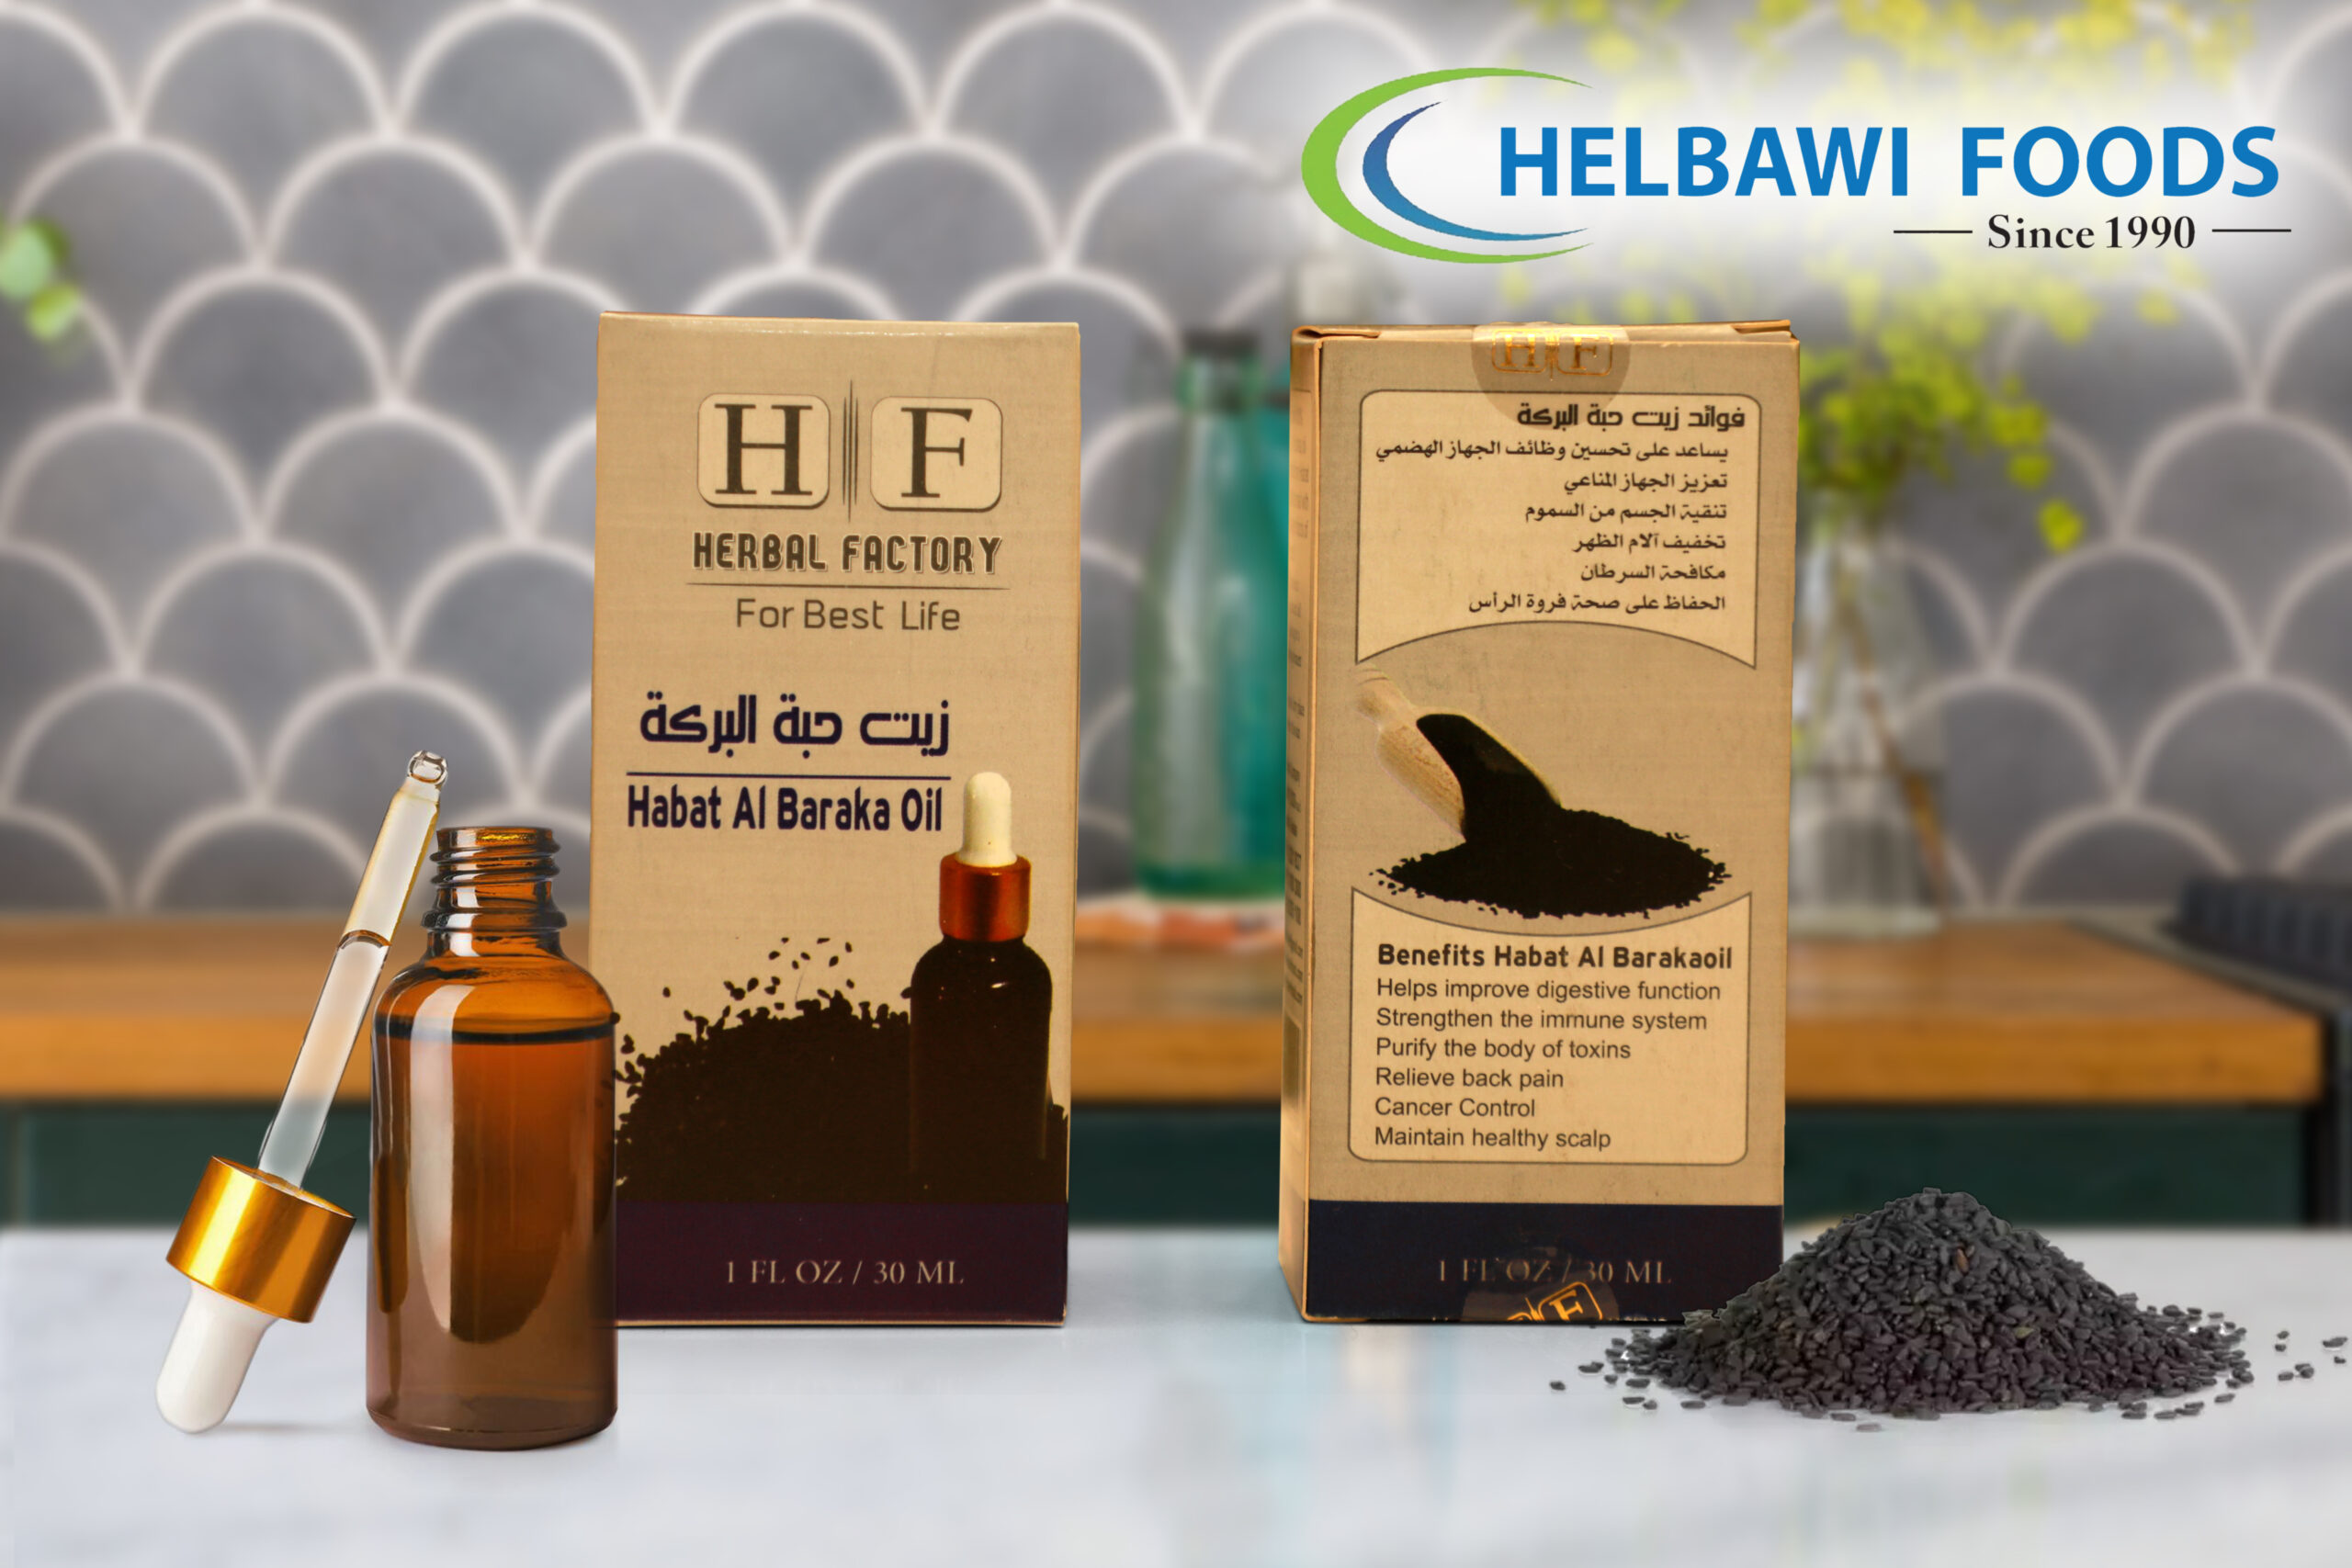 habat al baraka oil – Helbawi Foods